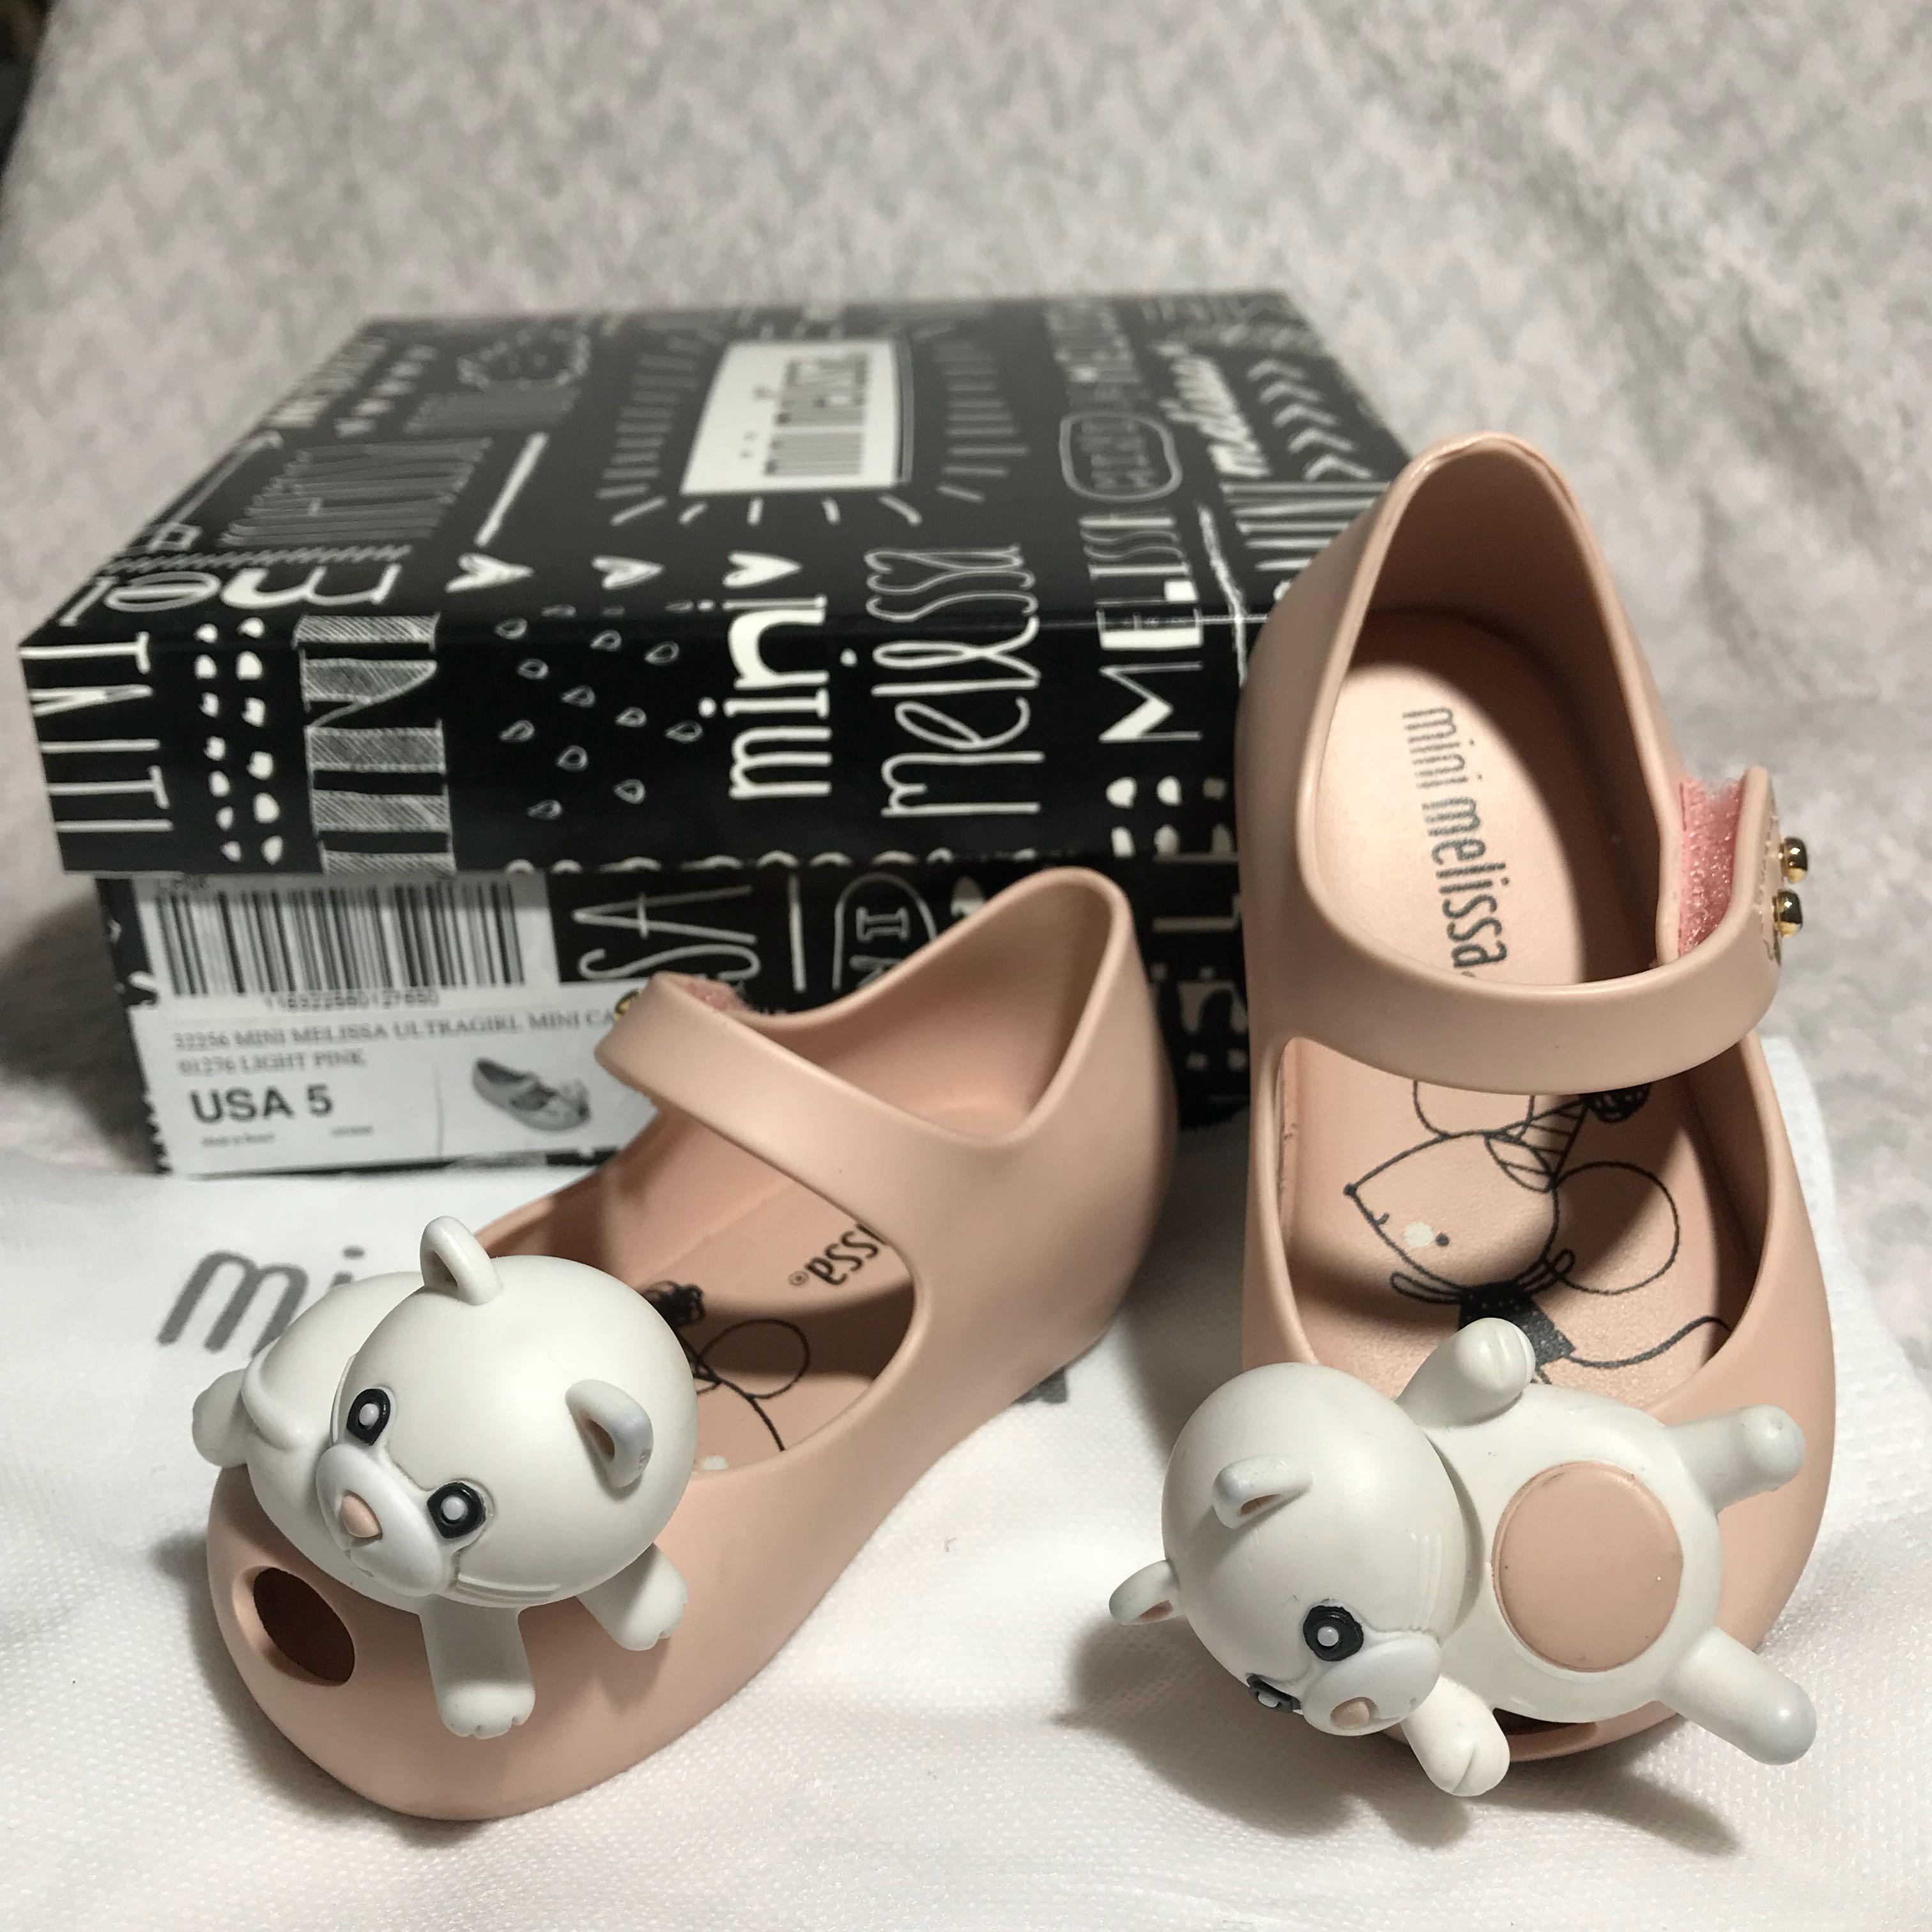 mini melissa pink cat shoes